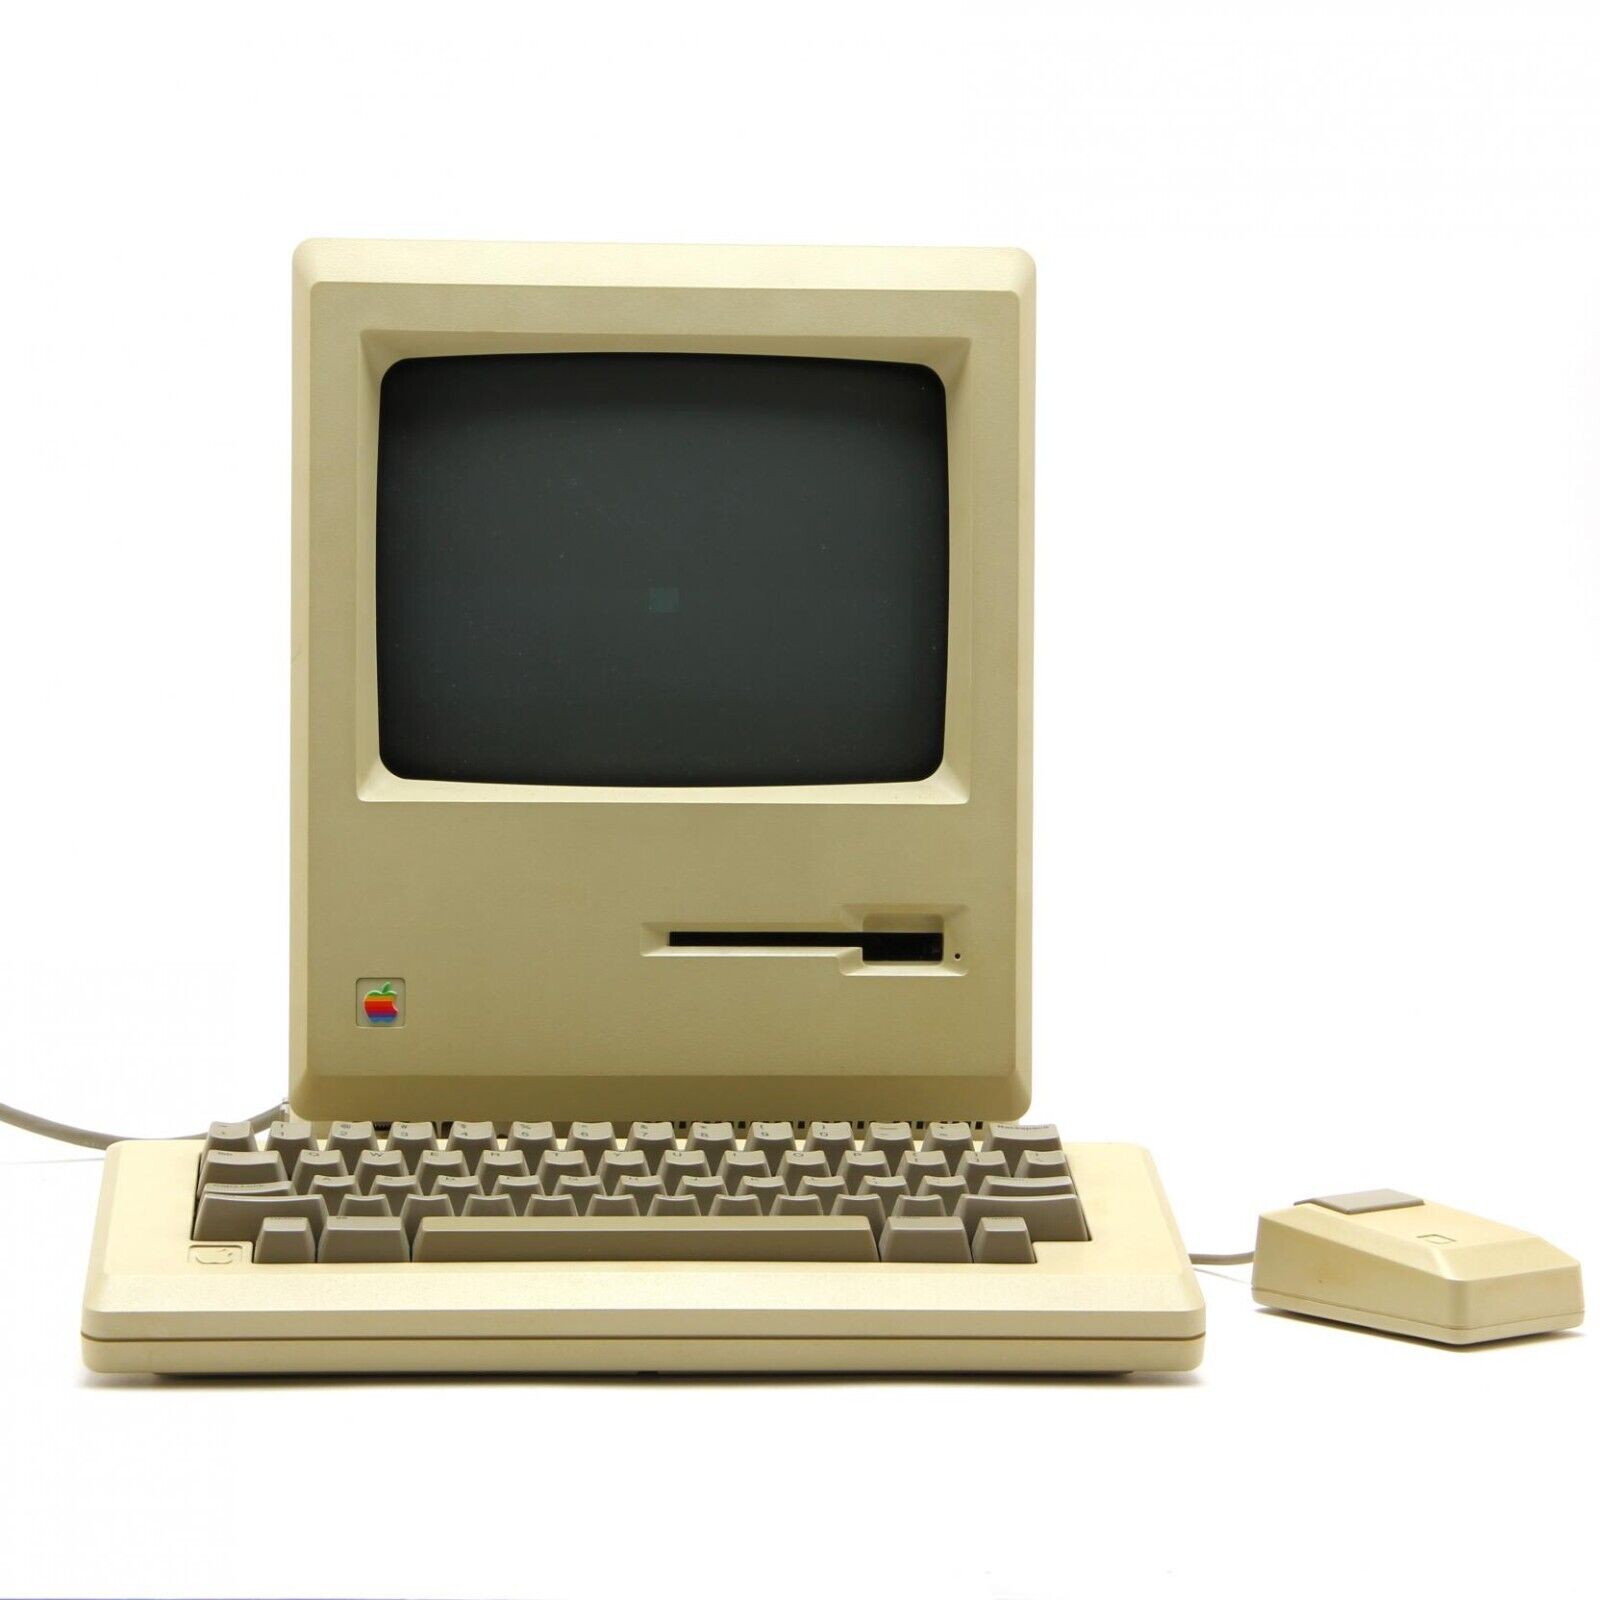 APPLE Macintosh M0001 128k Computer with original keyboard & mouse